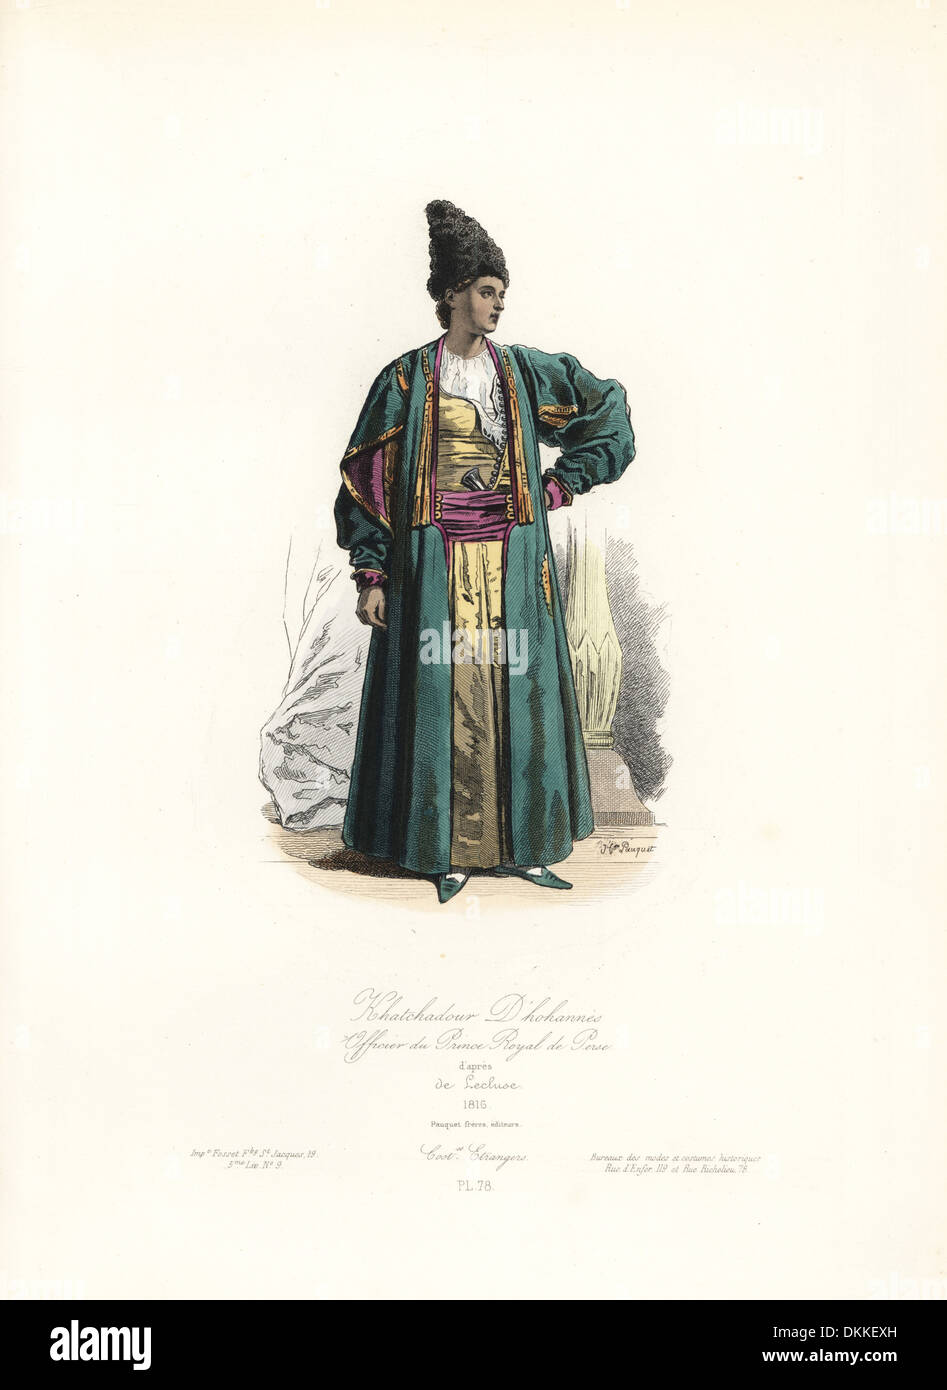 Khatchadour D'hohannes, ufficiale della Royal Prince of Persia, 1816. Foto Stock